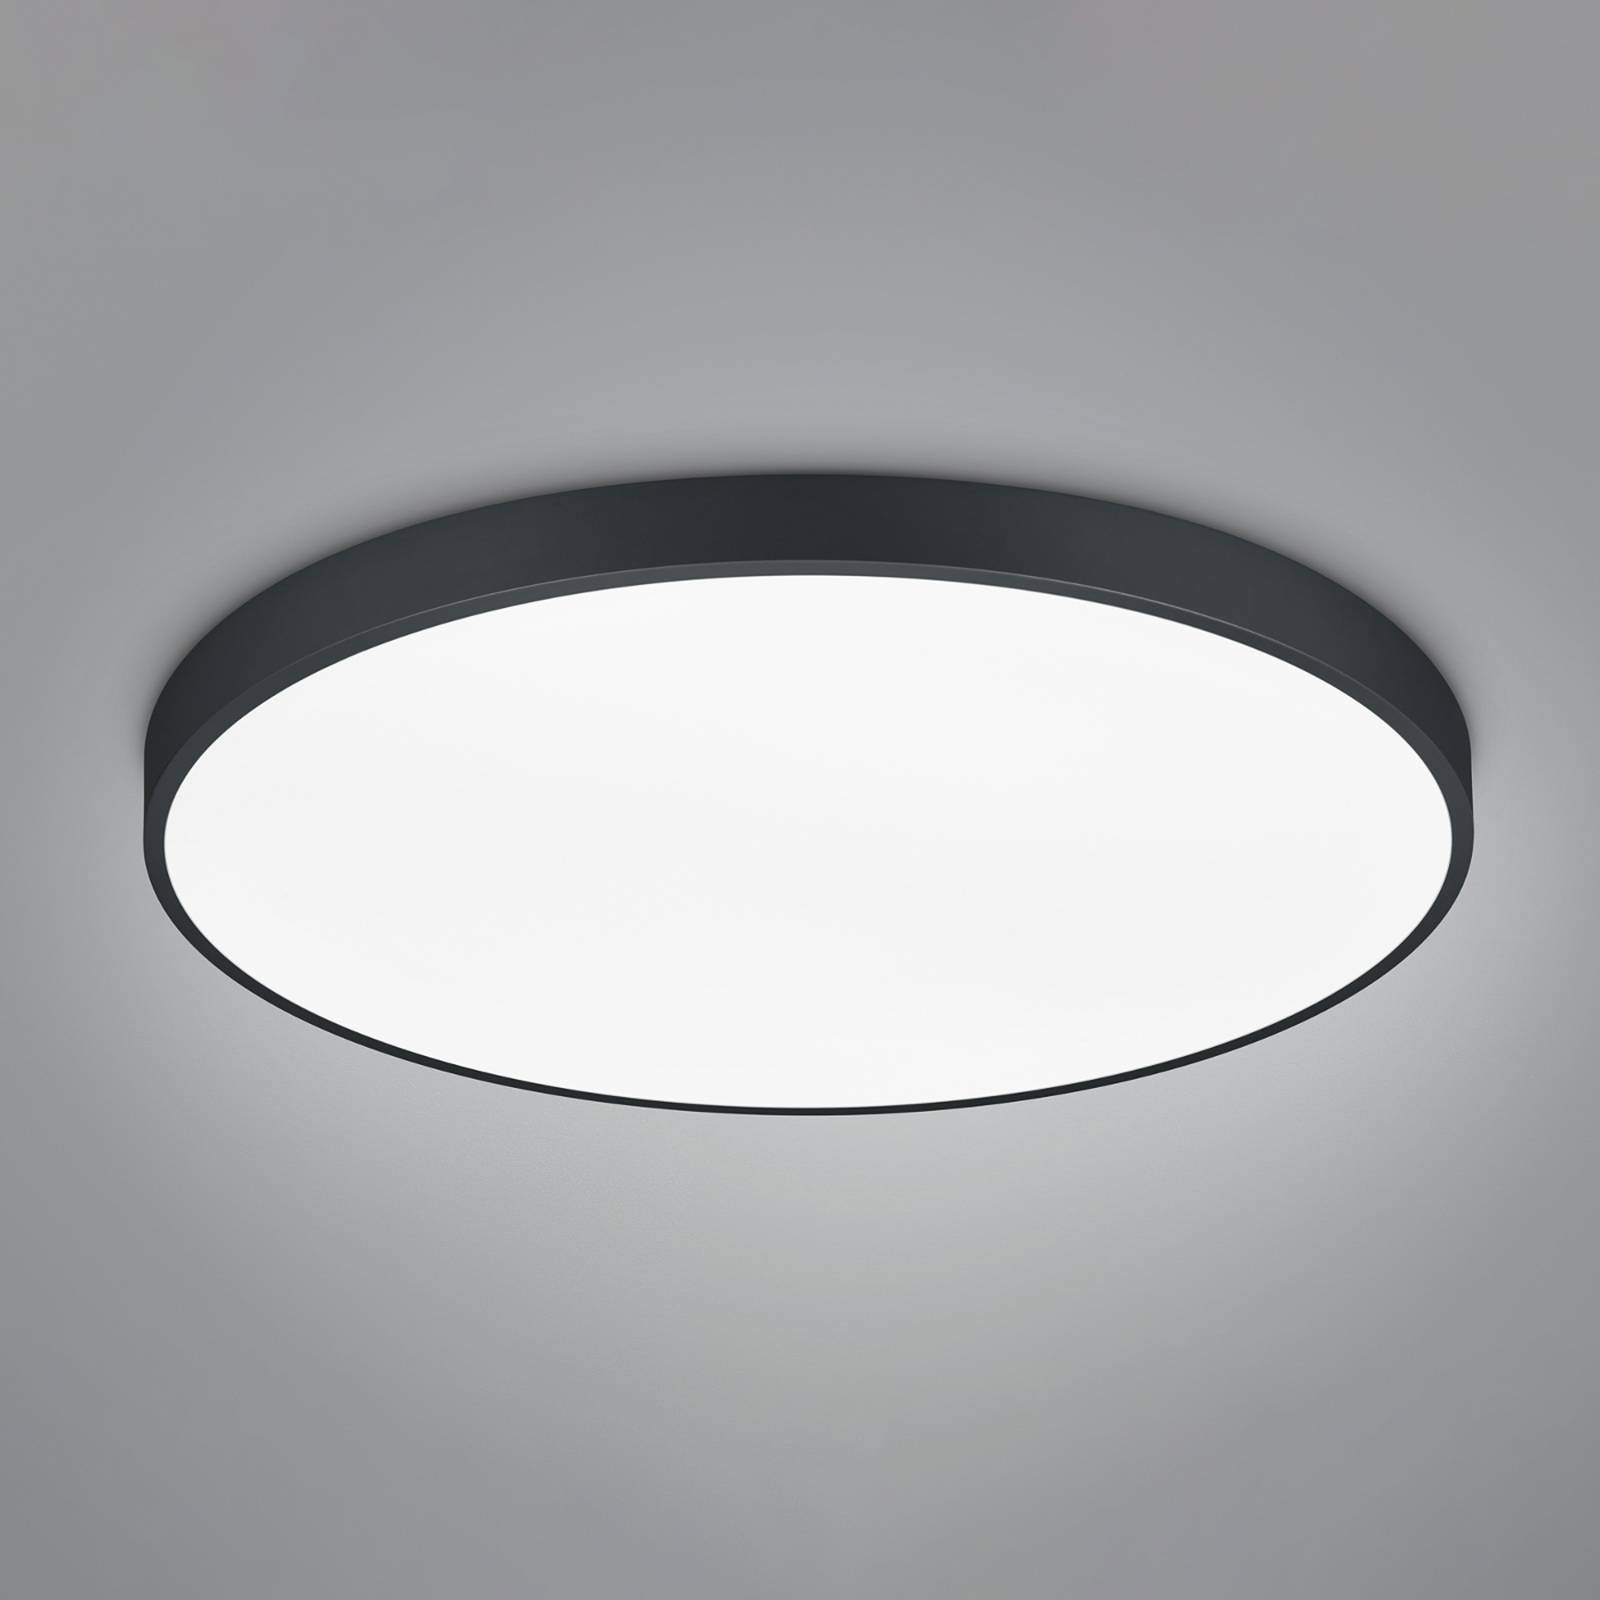 Trio Lighting Plafonnier LED Waco, CCT, Ø 75 cm, noir mat